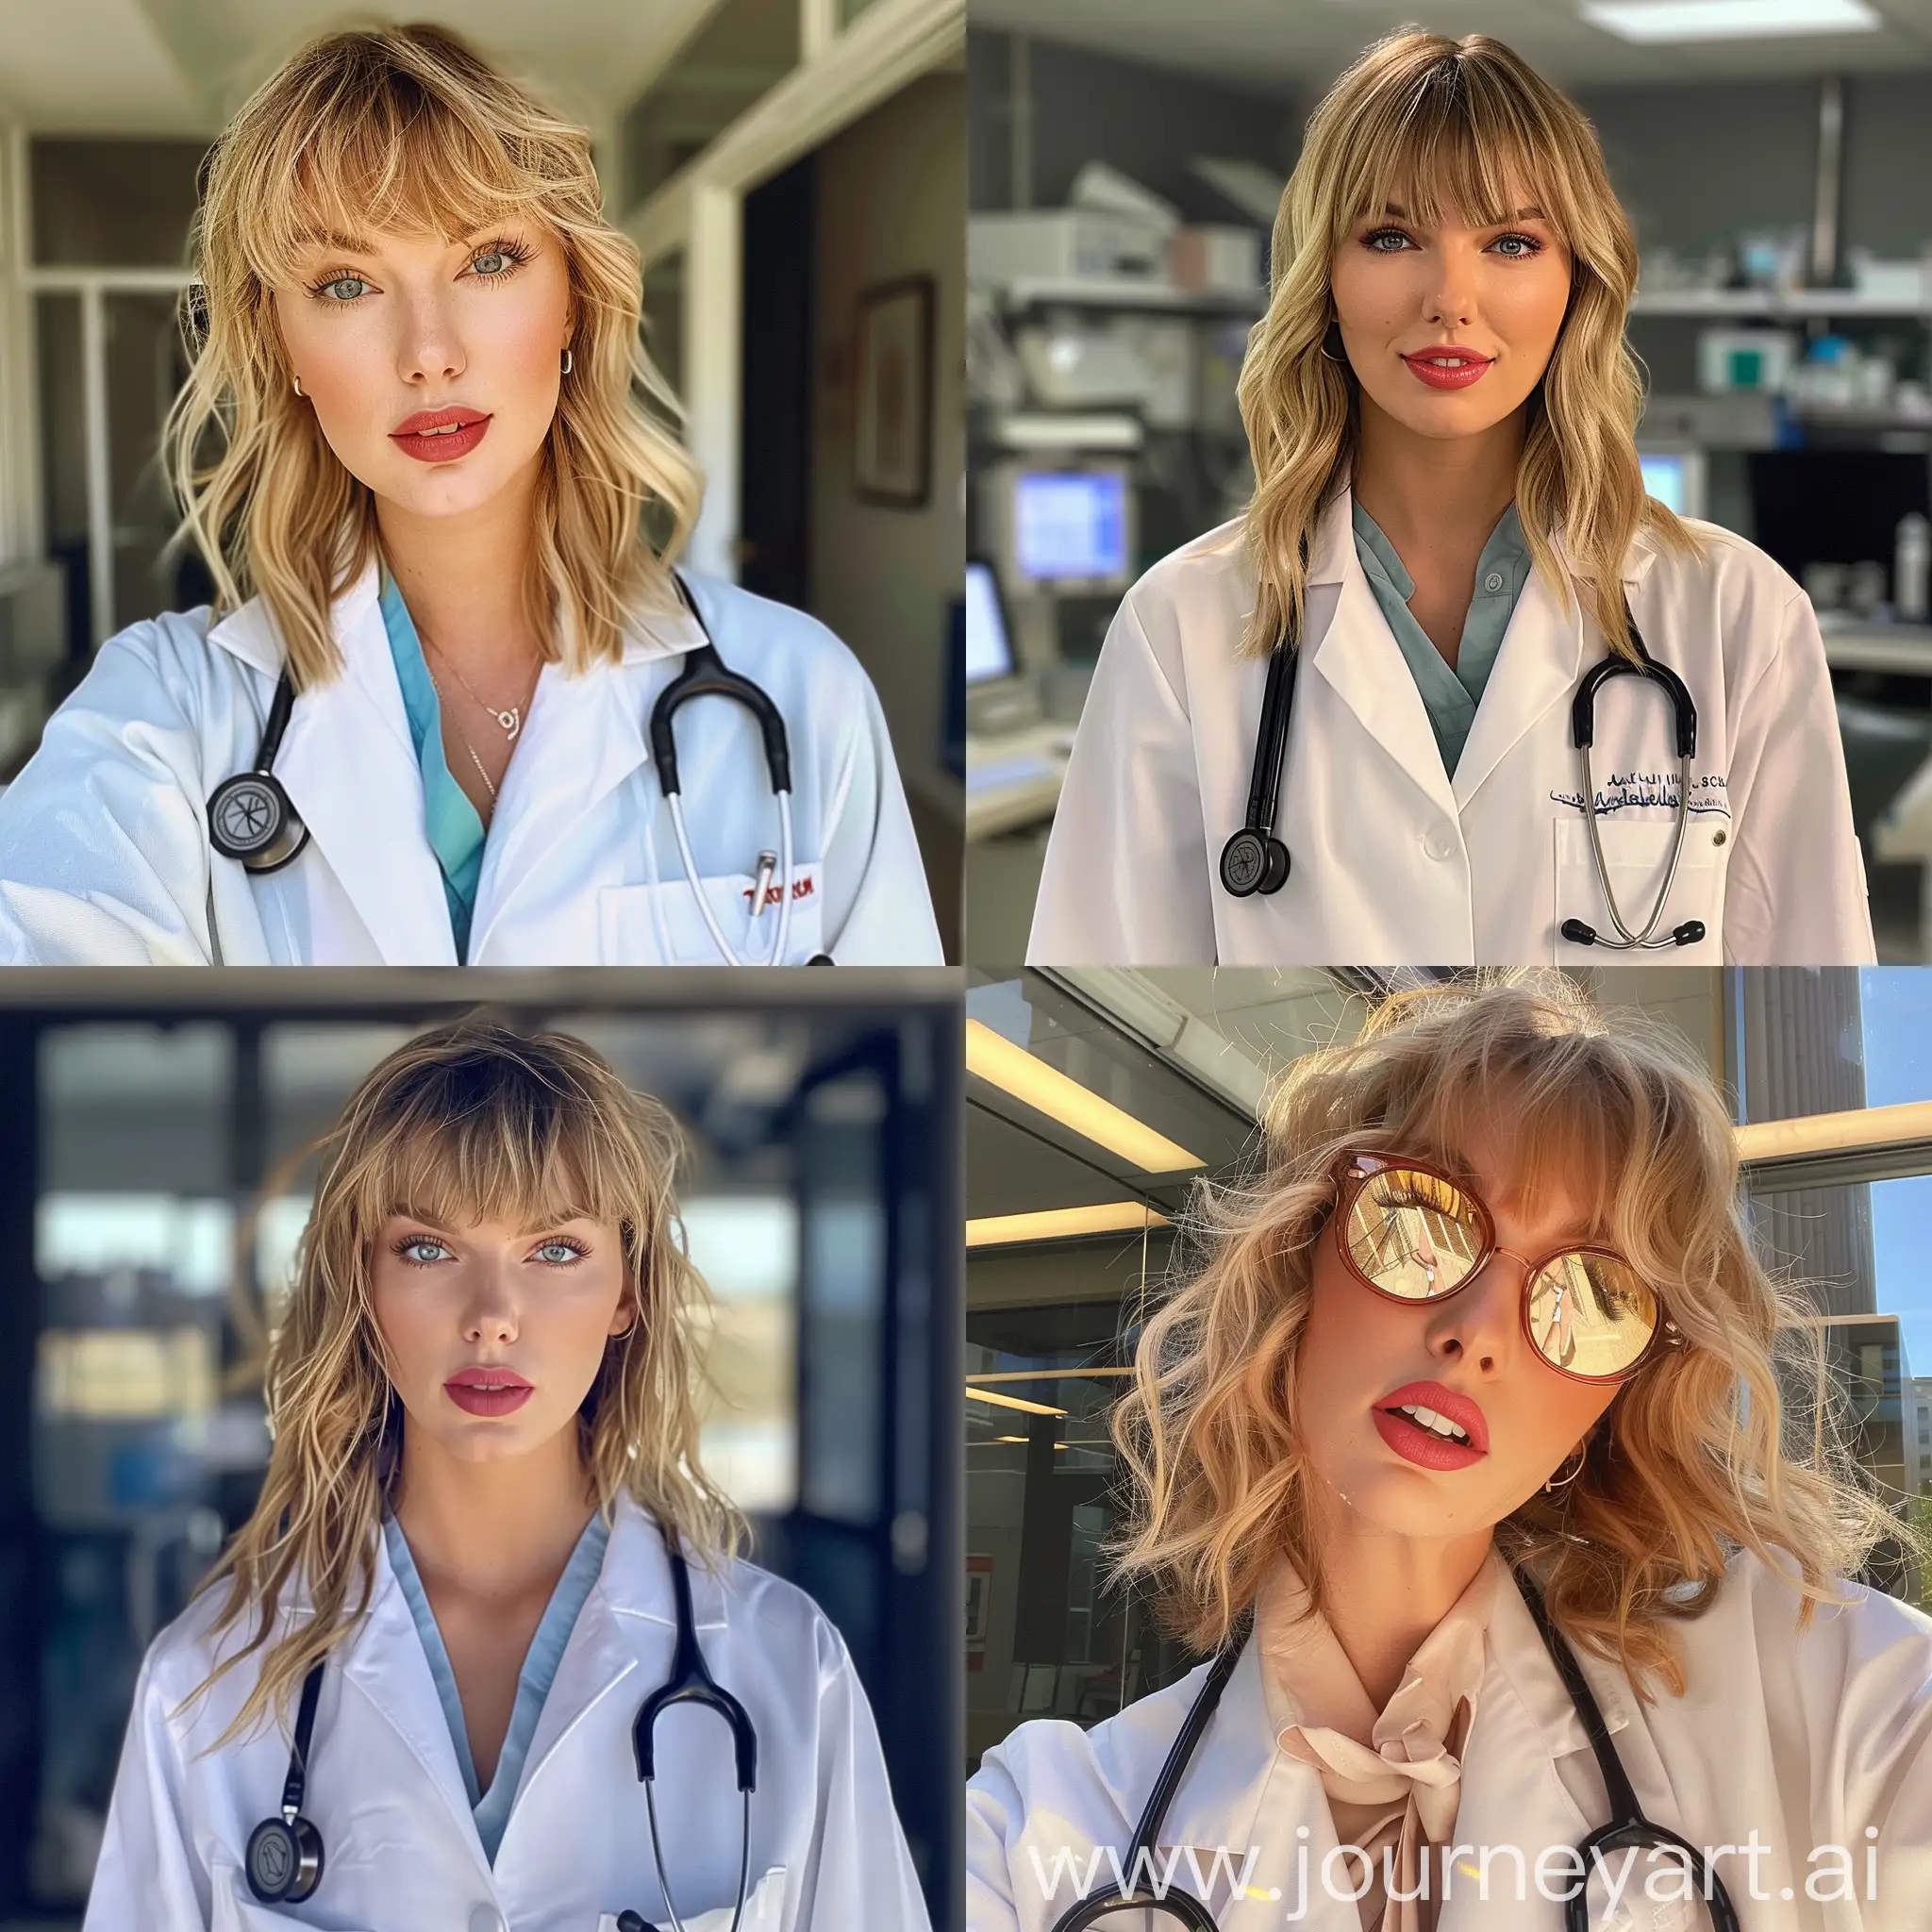 Taylor-Swift-in-Stylish-Medical-Attire